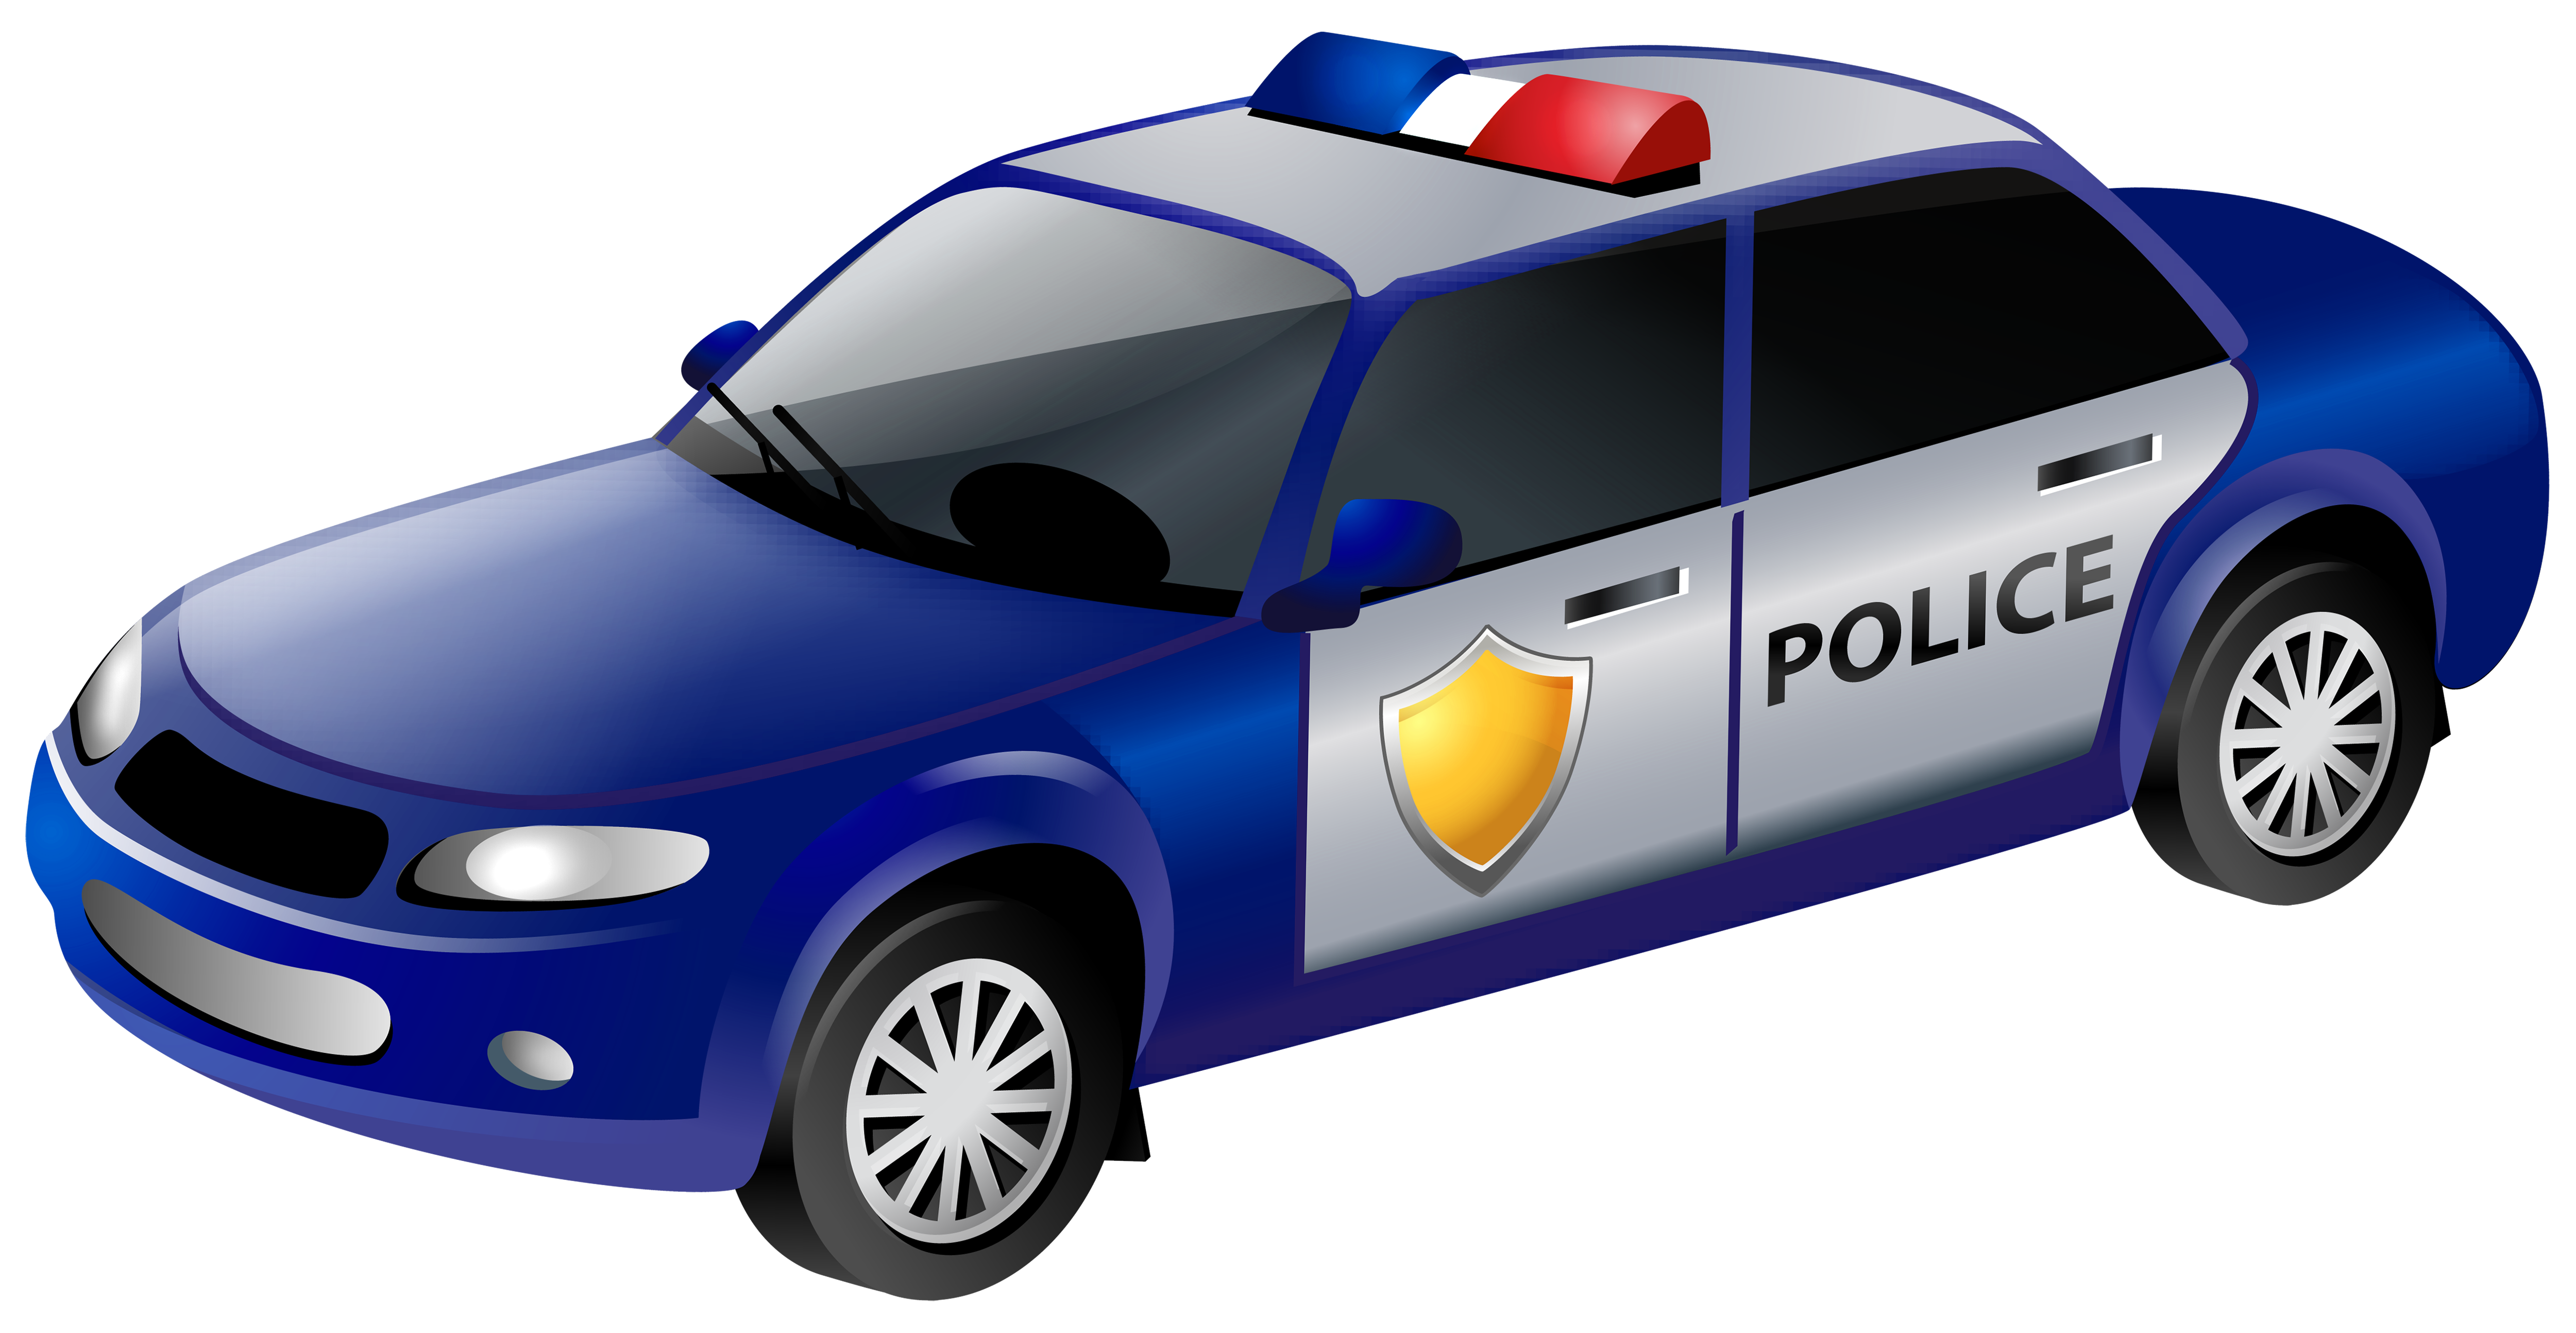 Free Police Car Clip Art